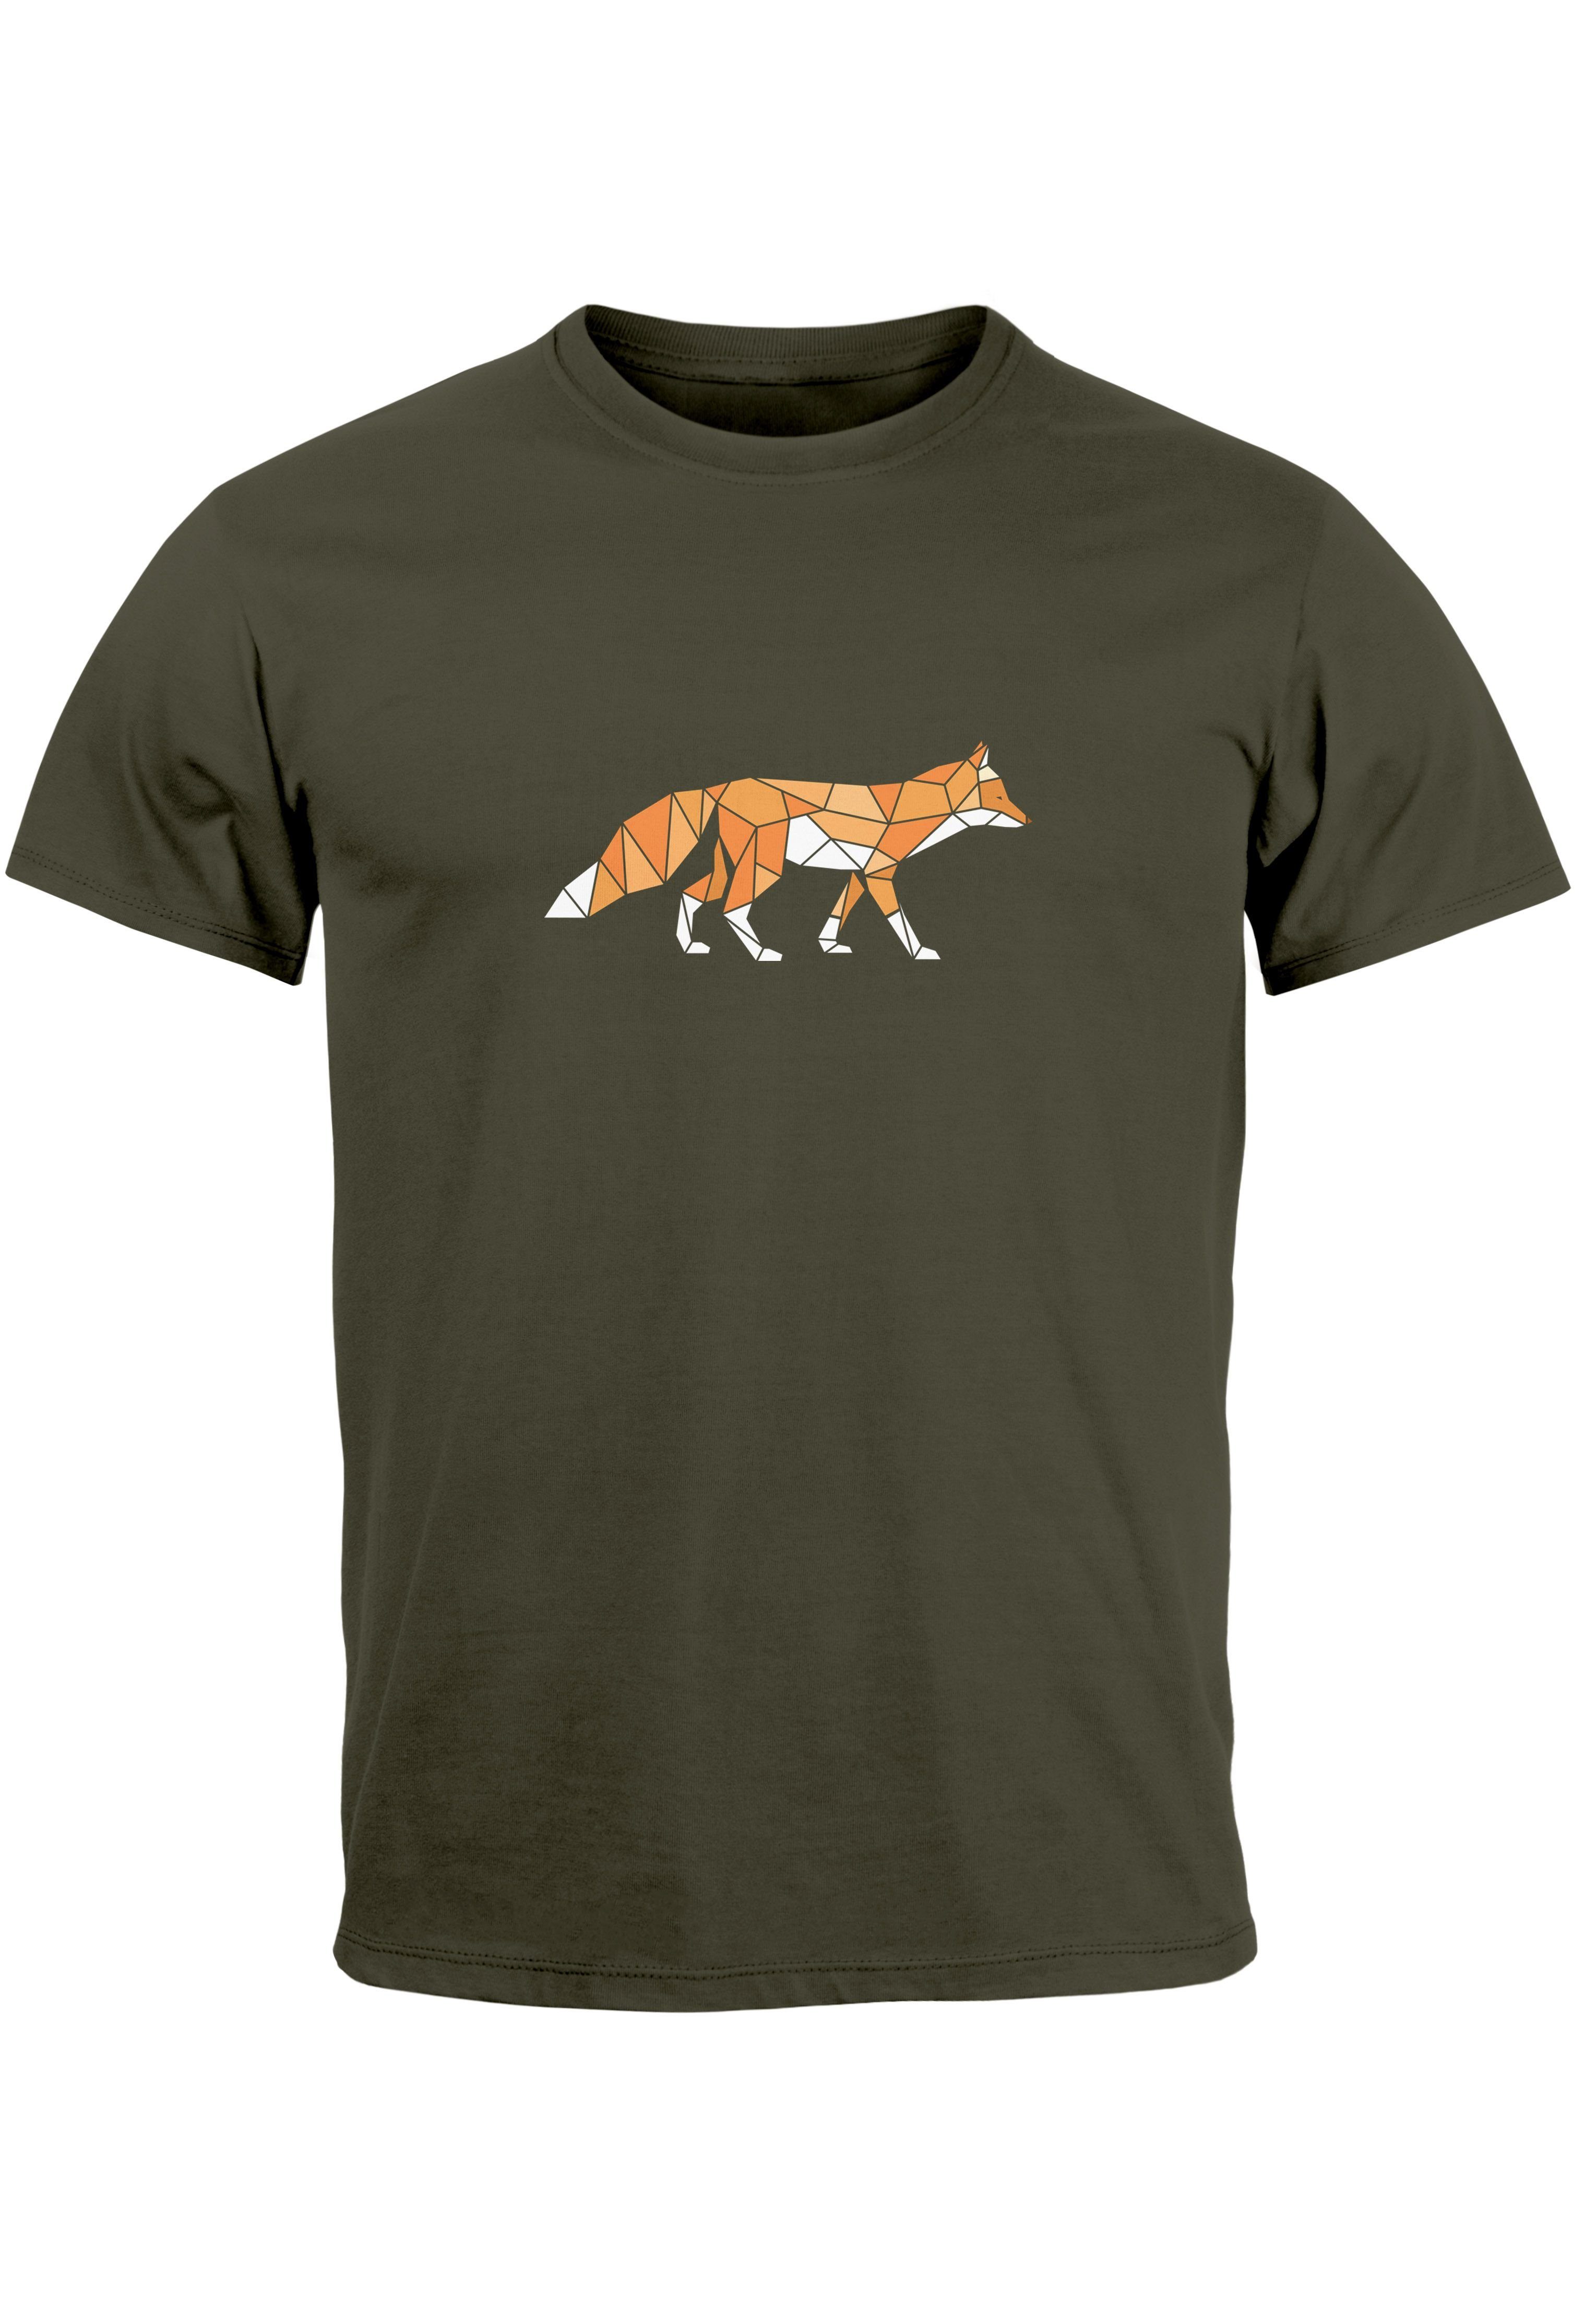 Neverless Print-Shirt Herren T-Shirt Aufdruck Fuchs Polygon Kunstdruck Geometrie Outdoor Log mit Print army